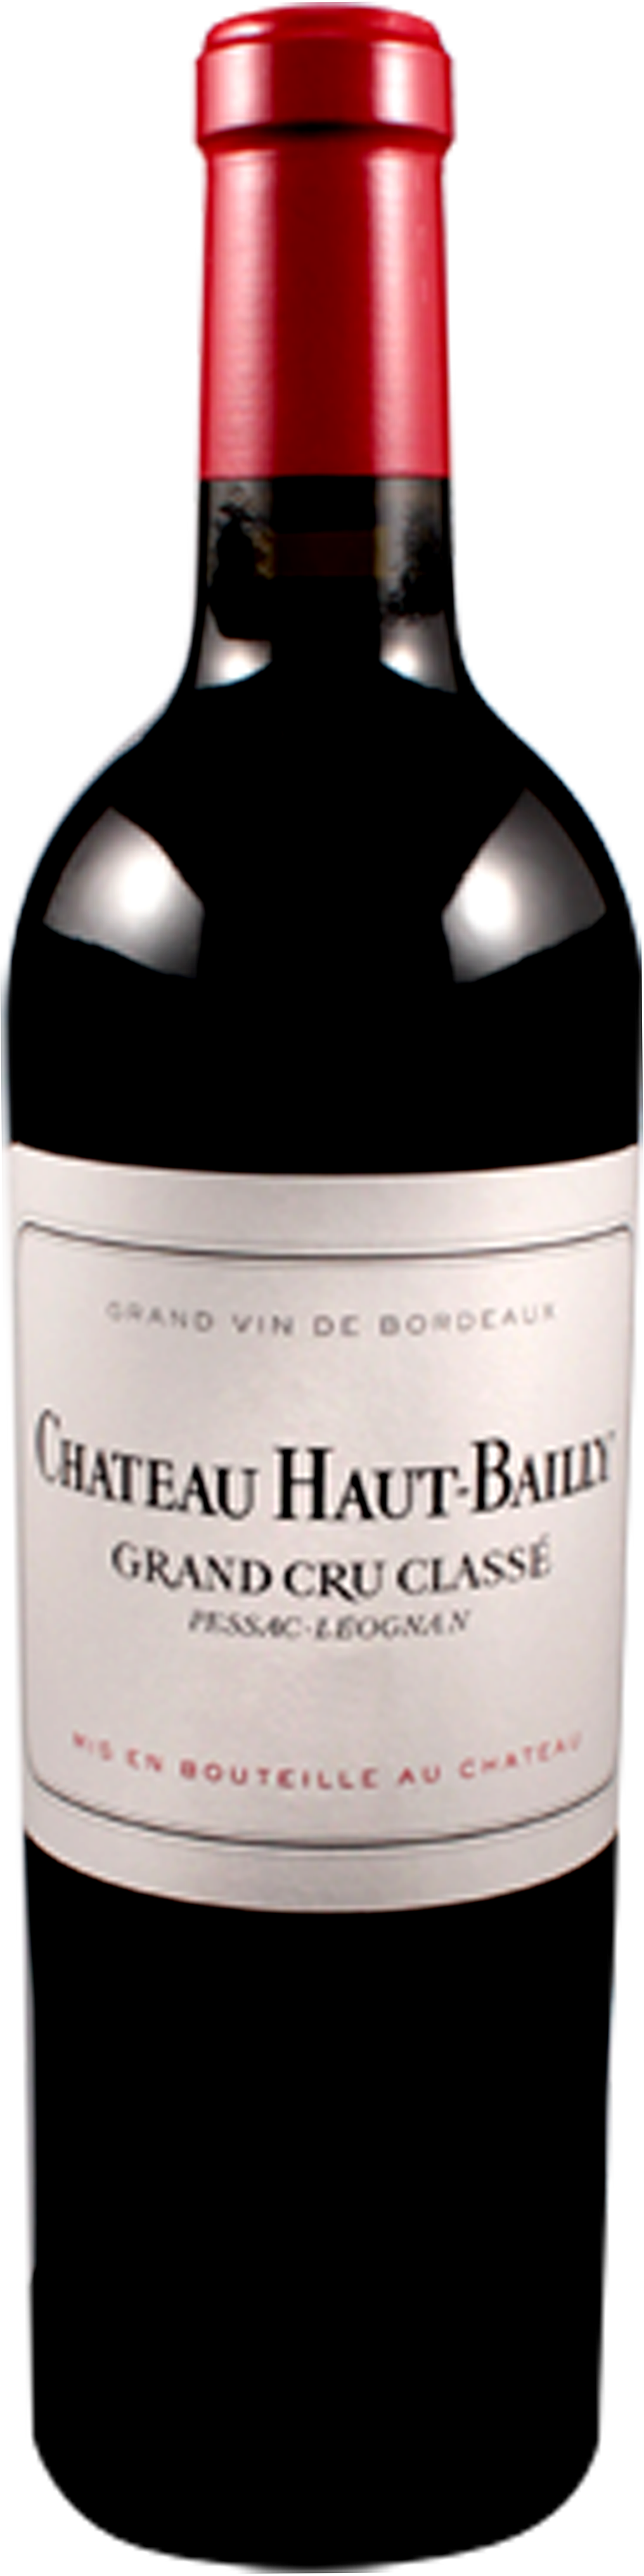 Image of product Château Haut Bailly, Cru Classé Graves